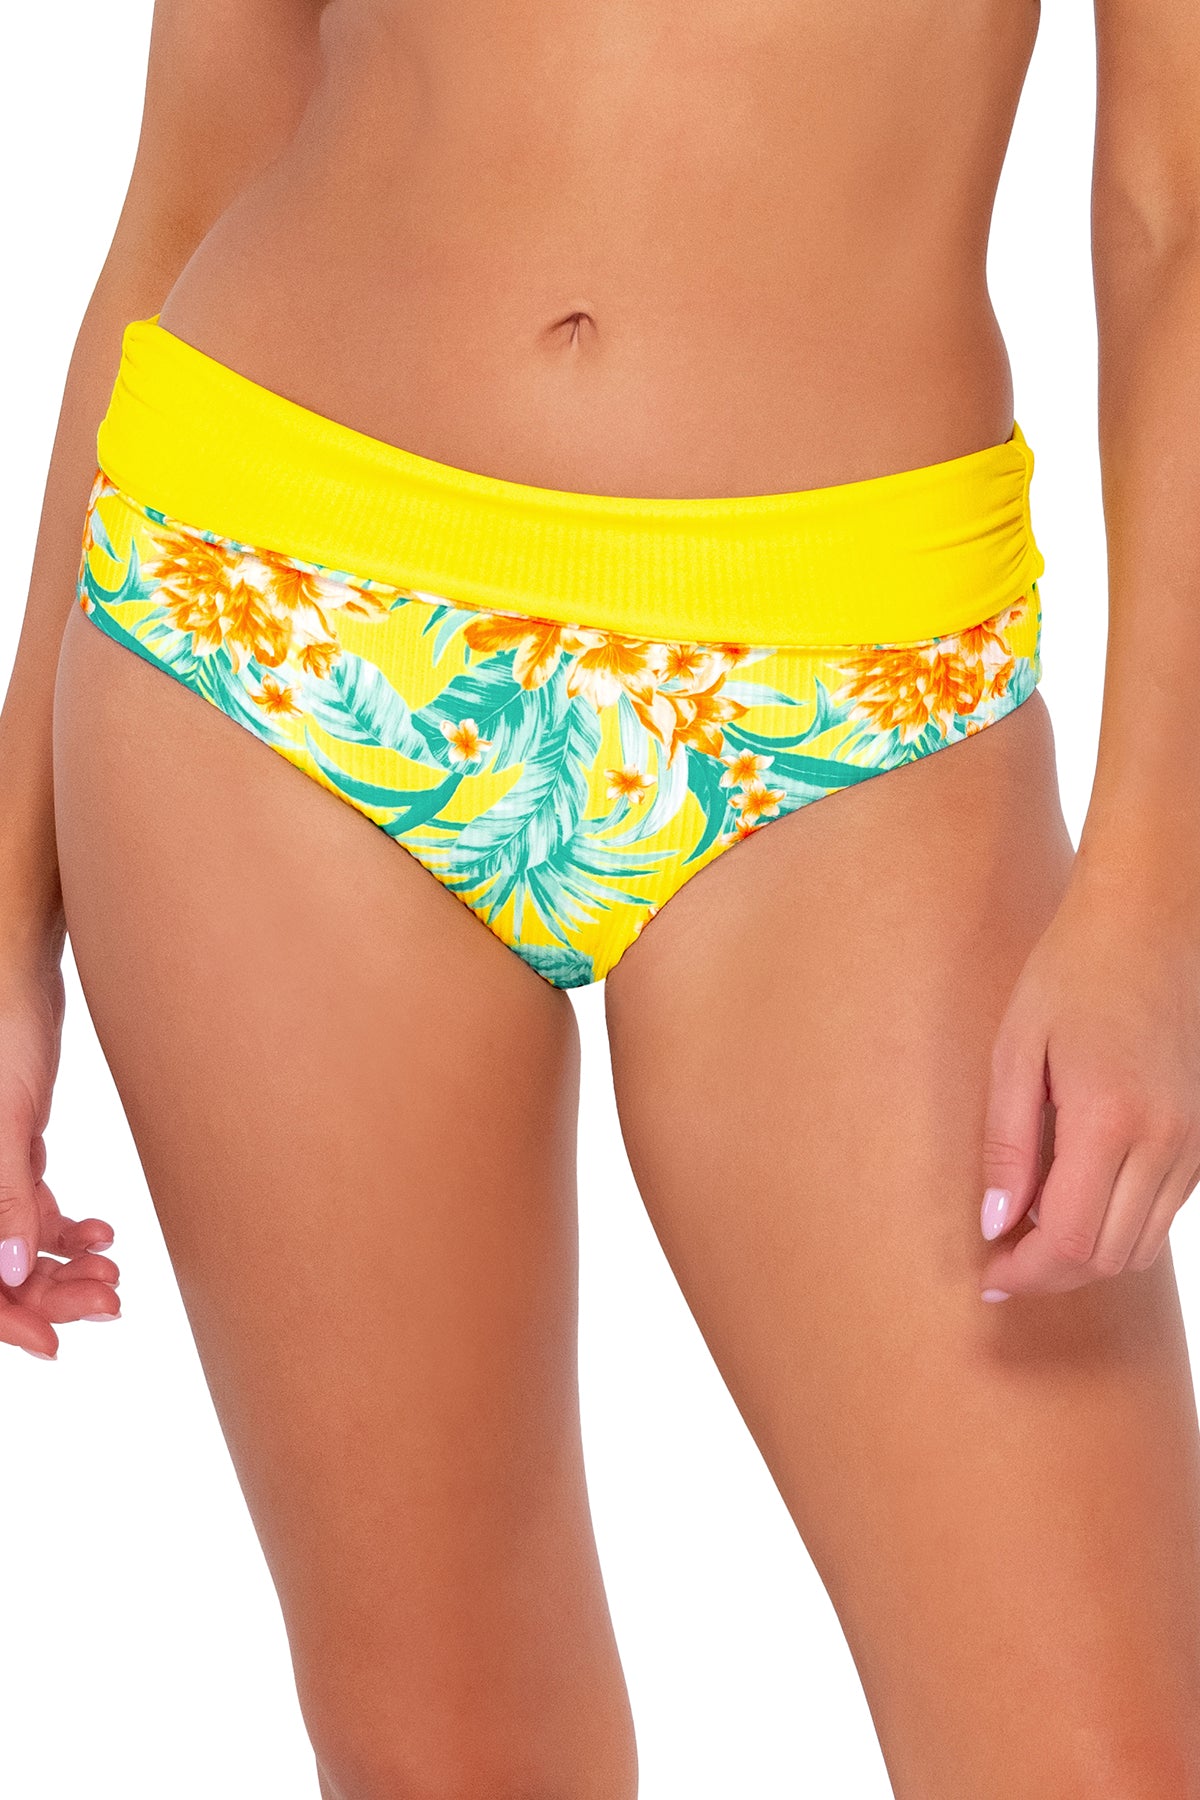 Front pose #1 of Daria wearing Sunsets Golden Tropics Sandbar Rib Capri High Waist Bottom showing folded waist .